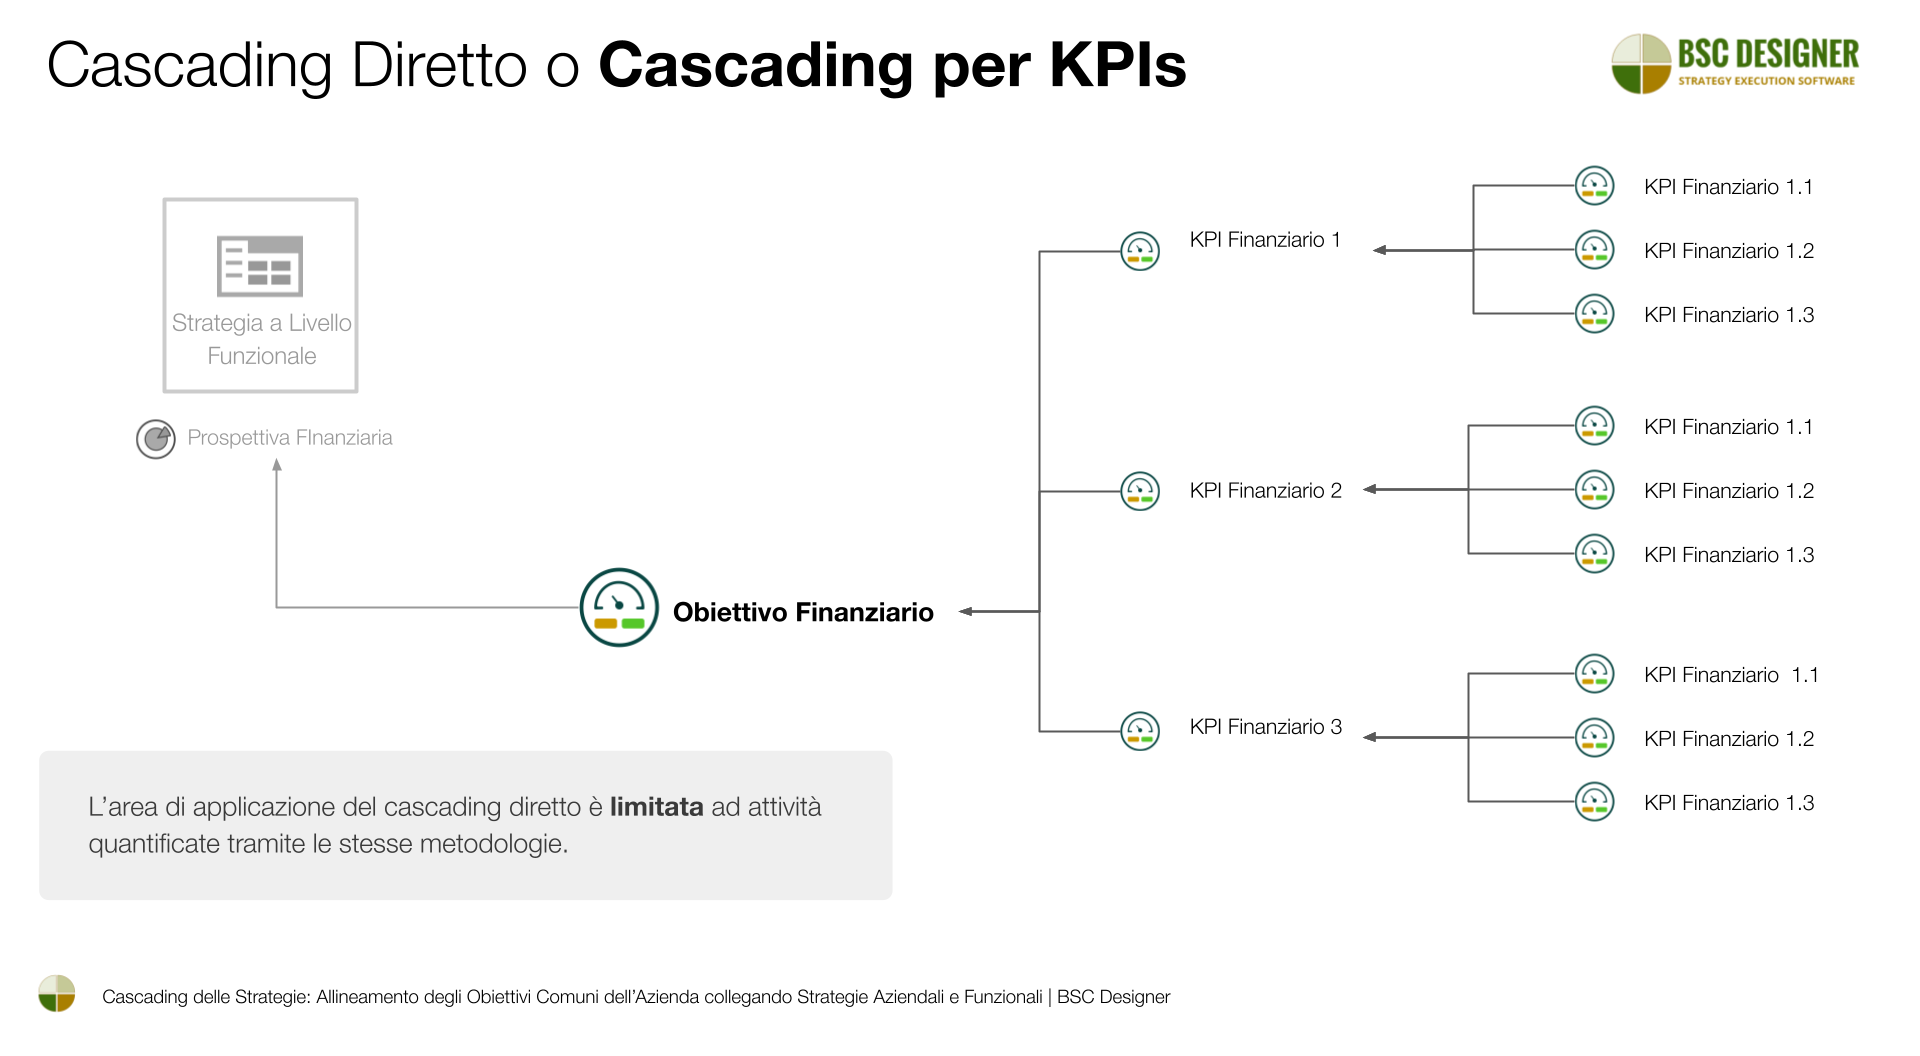 Metodo di Cascading 3: Cascading Diretto o Cascading per KPIs 